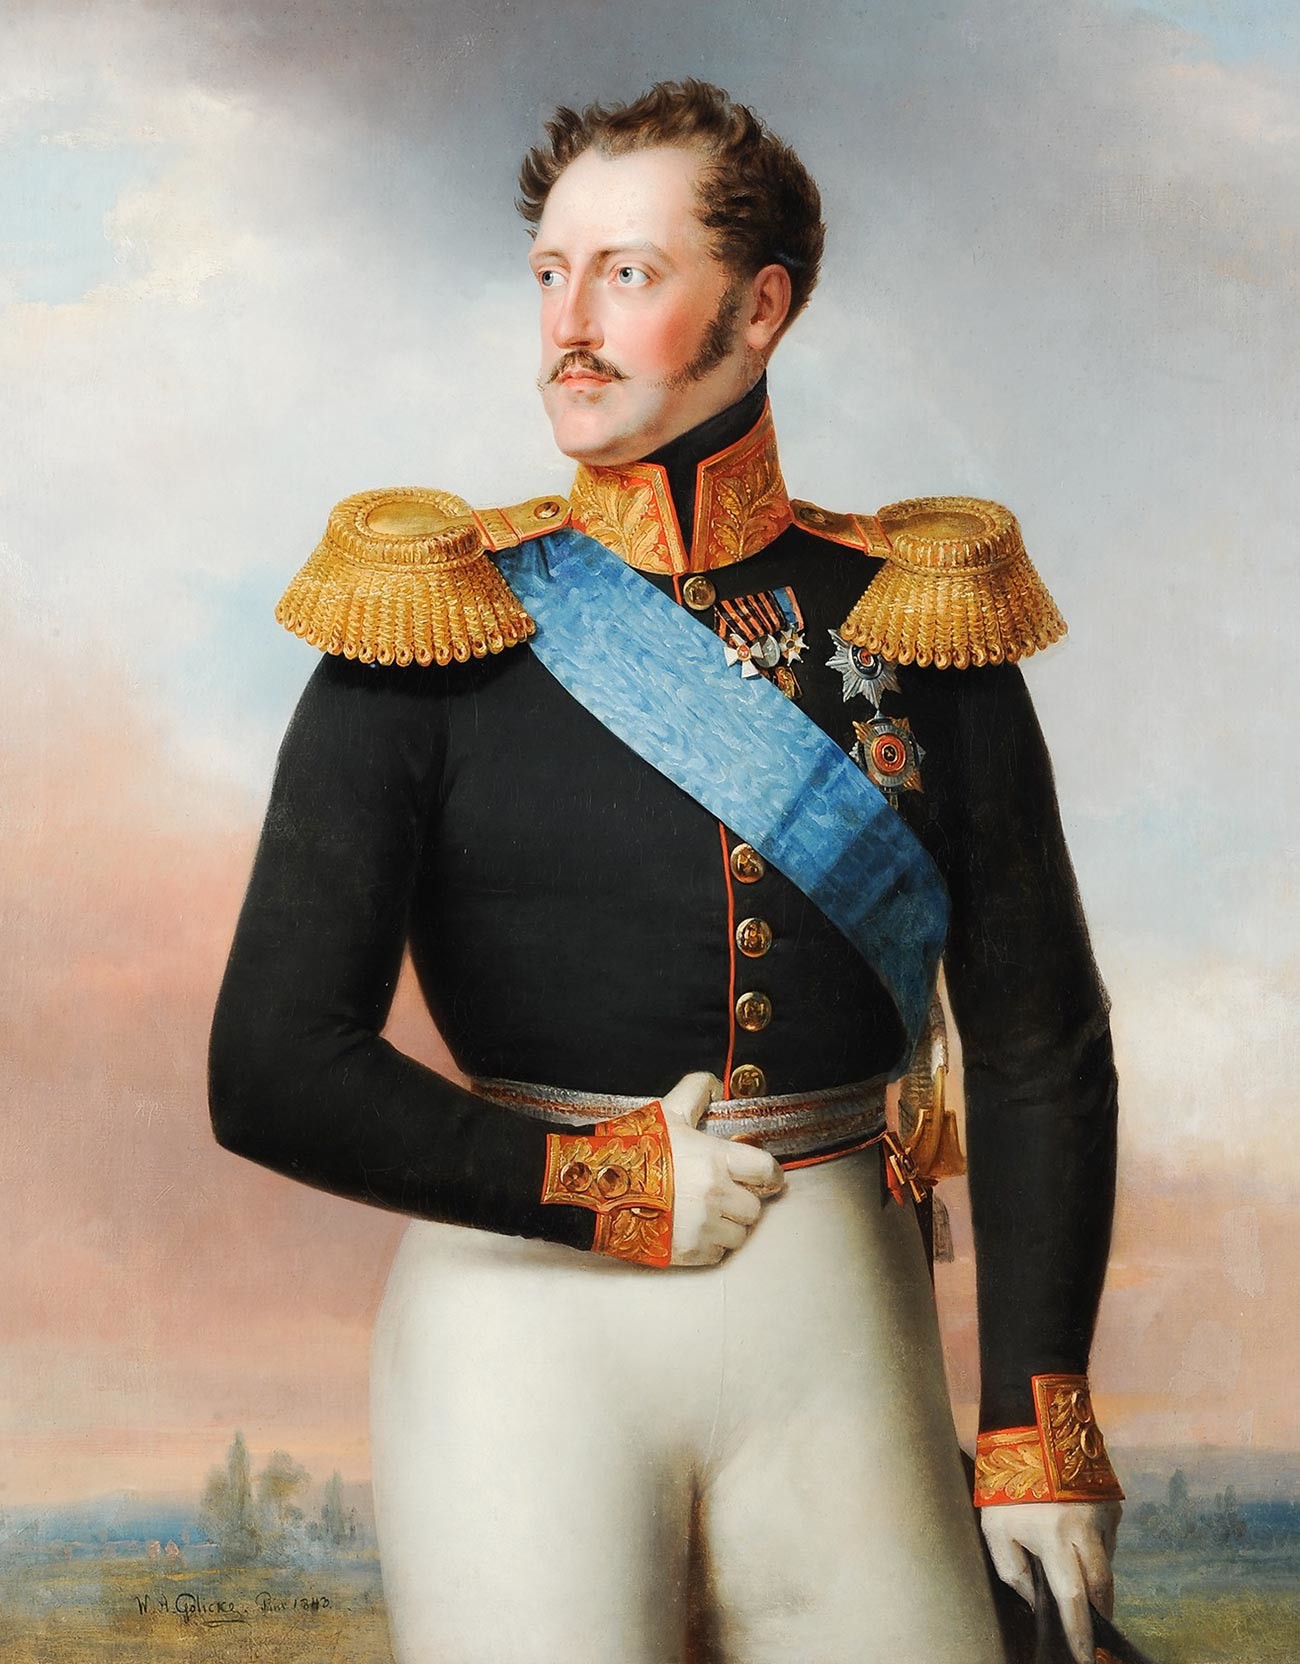 Nicolás I, 1843
